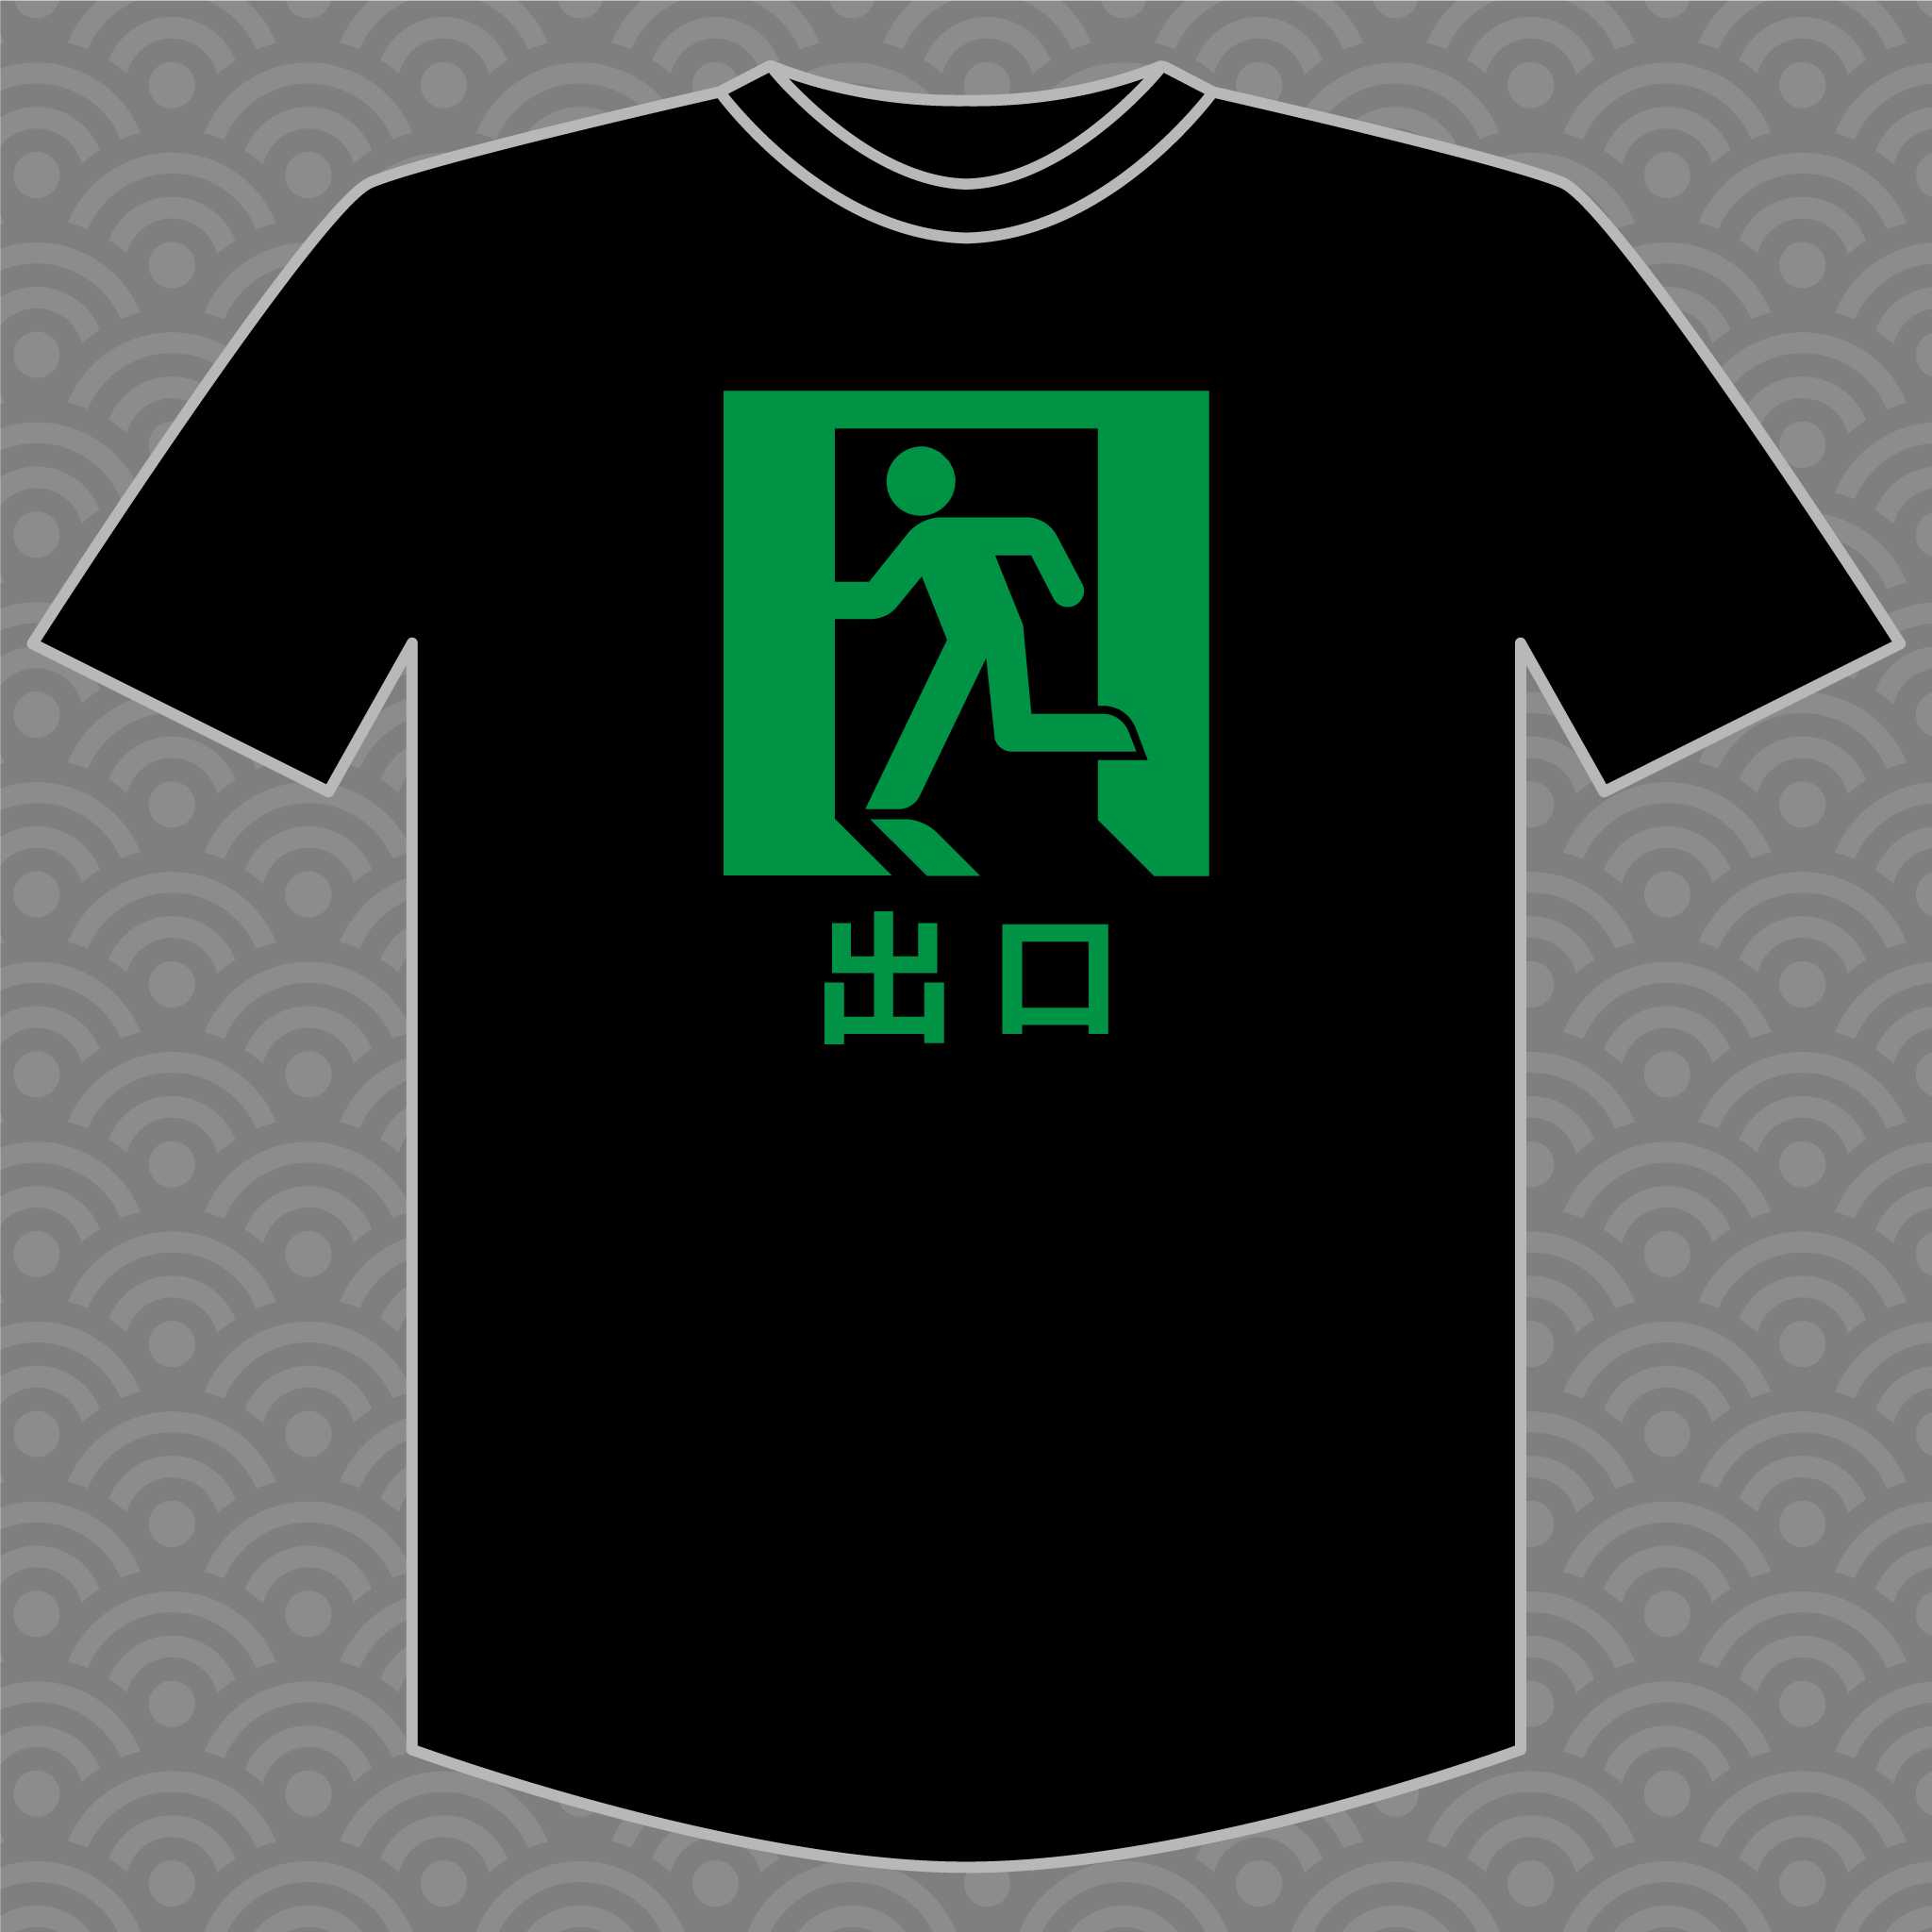 Load - Japanese T-Shirt